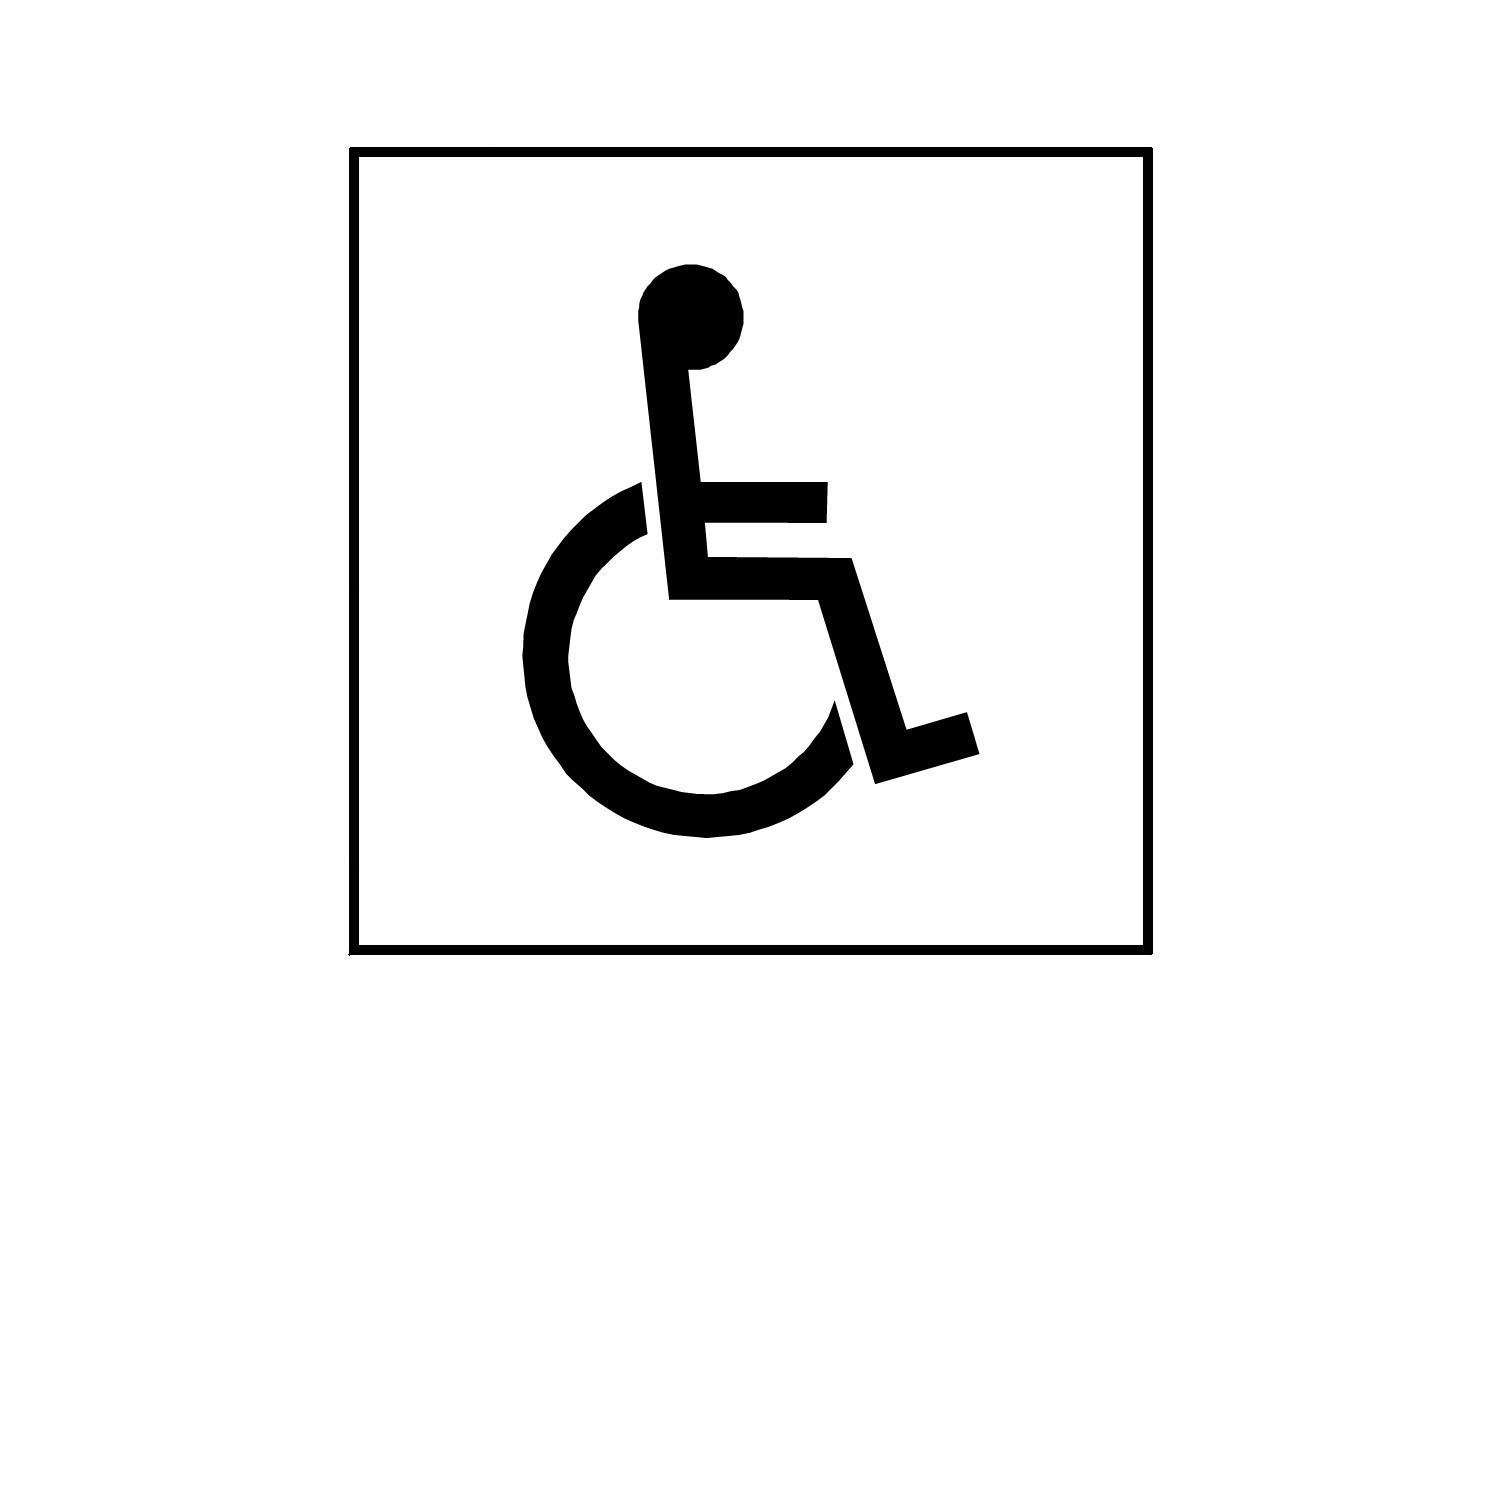 handicap sign black